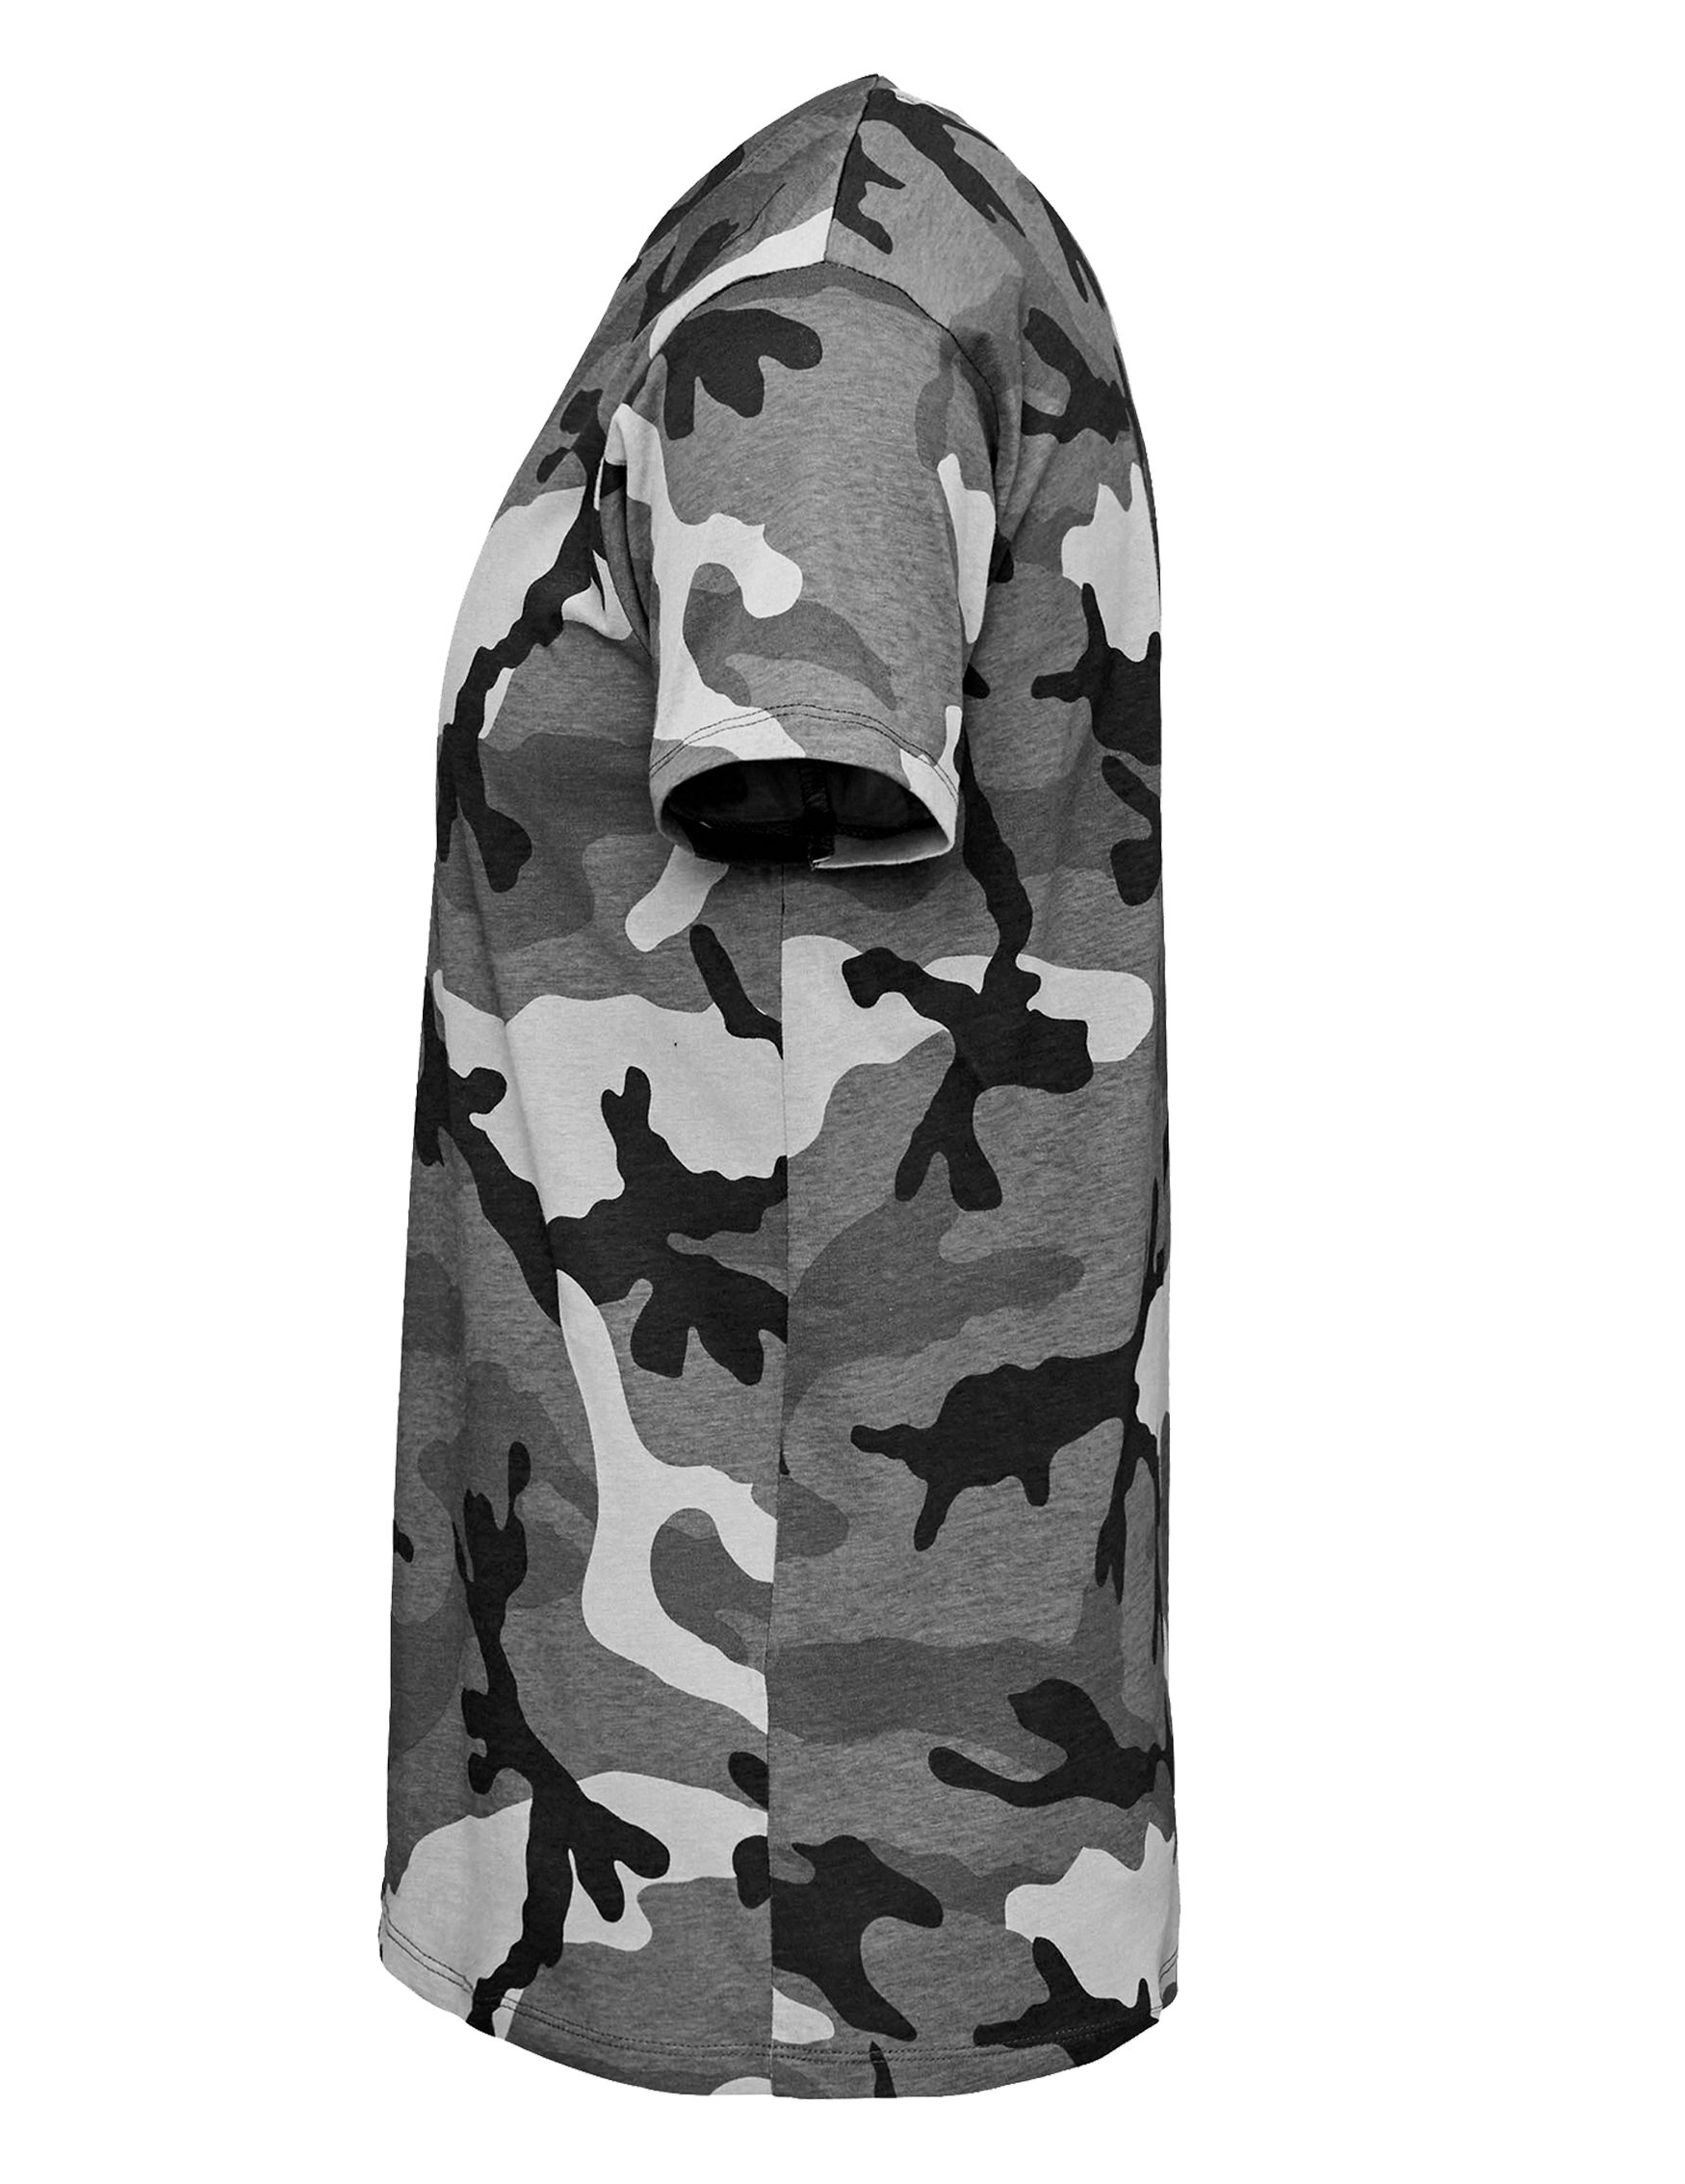 Art & Detail Shirt Camo Military, Army Blau T-Shirt Tarn lieferbar, Camo Camouflage Grey Farben Grün in Look Grau und